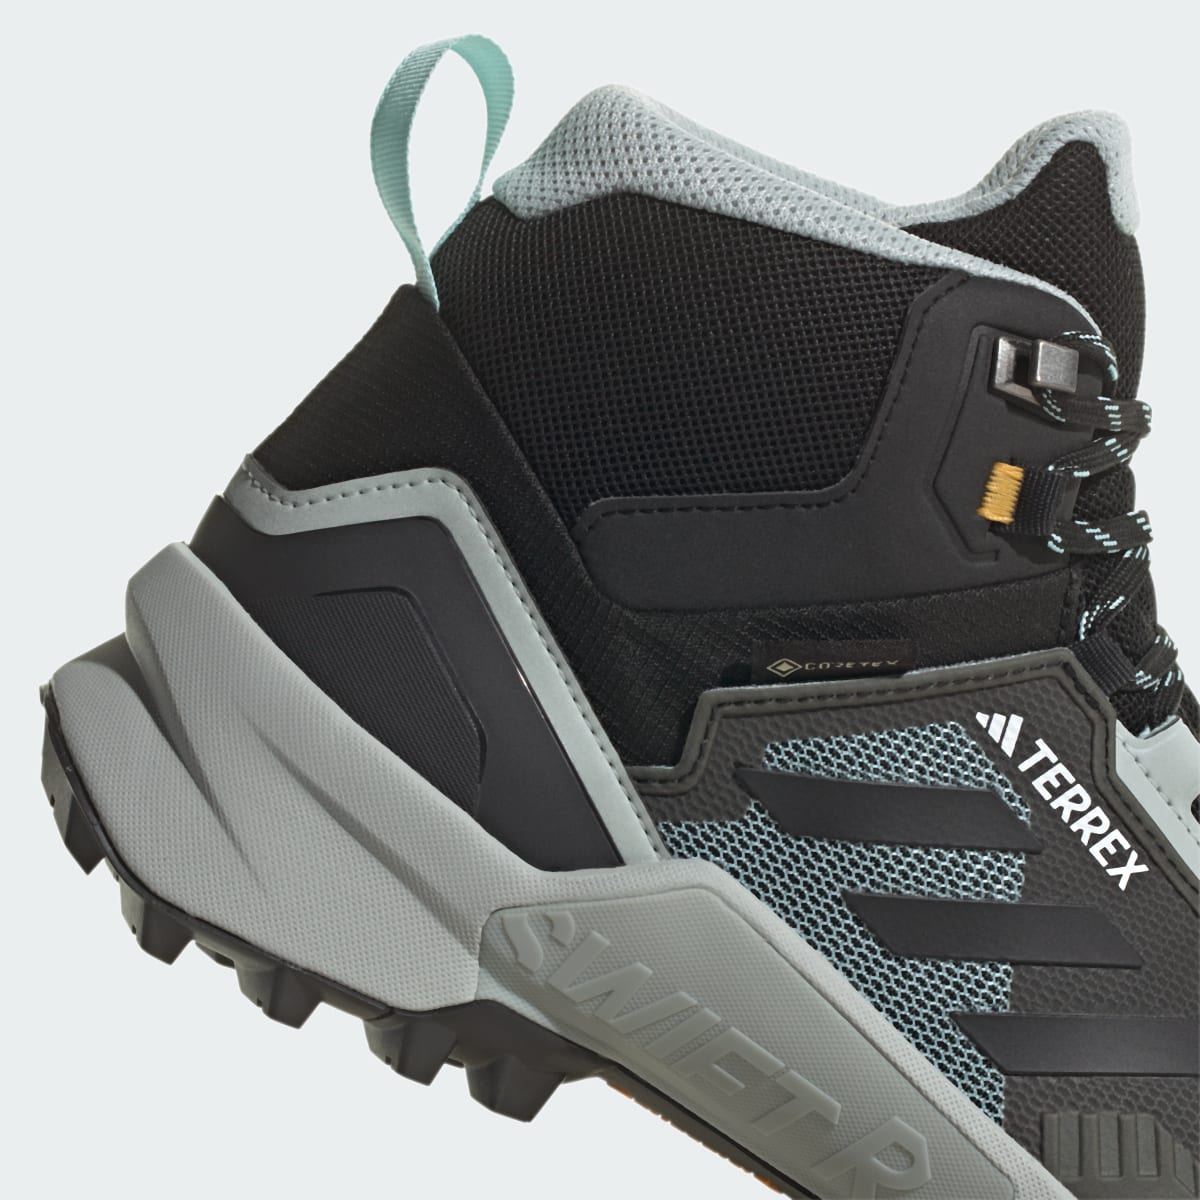 Adidas Chaussure de randonnée Terrex Swift R3 Mid GORE-TEX. 4